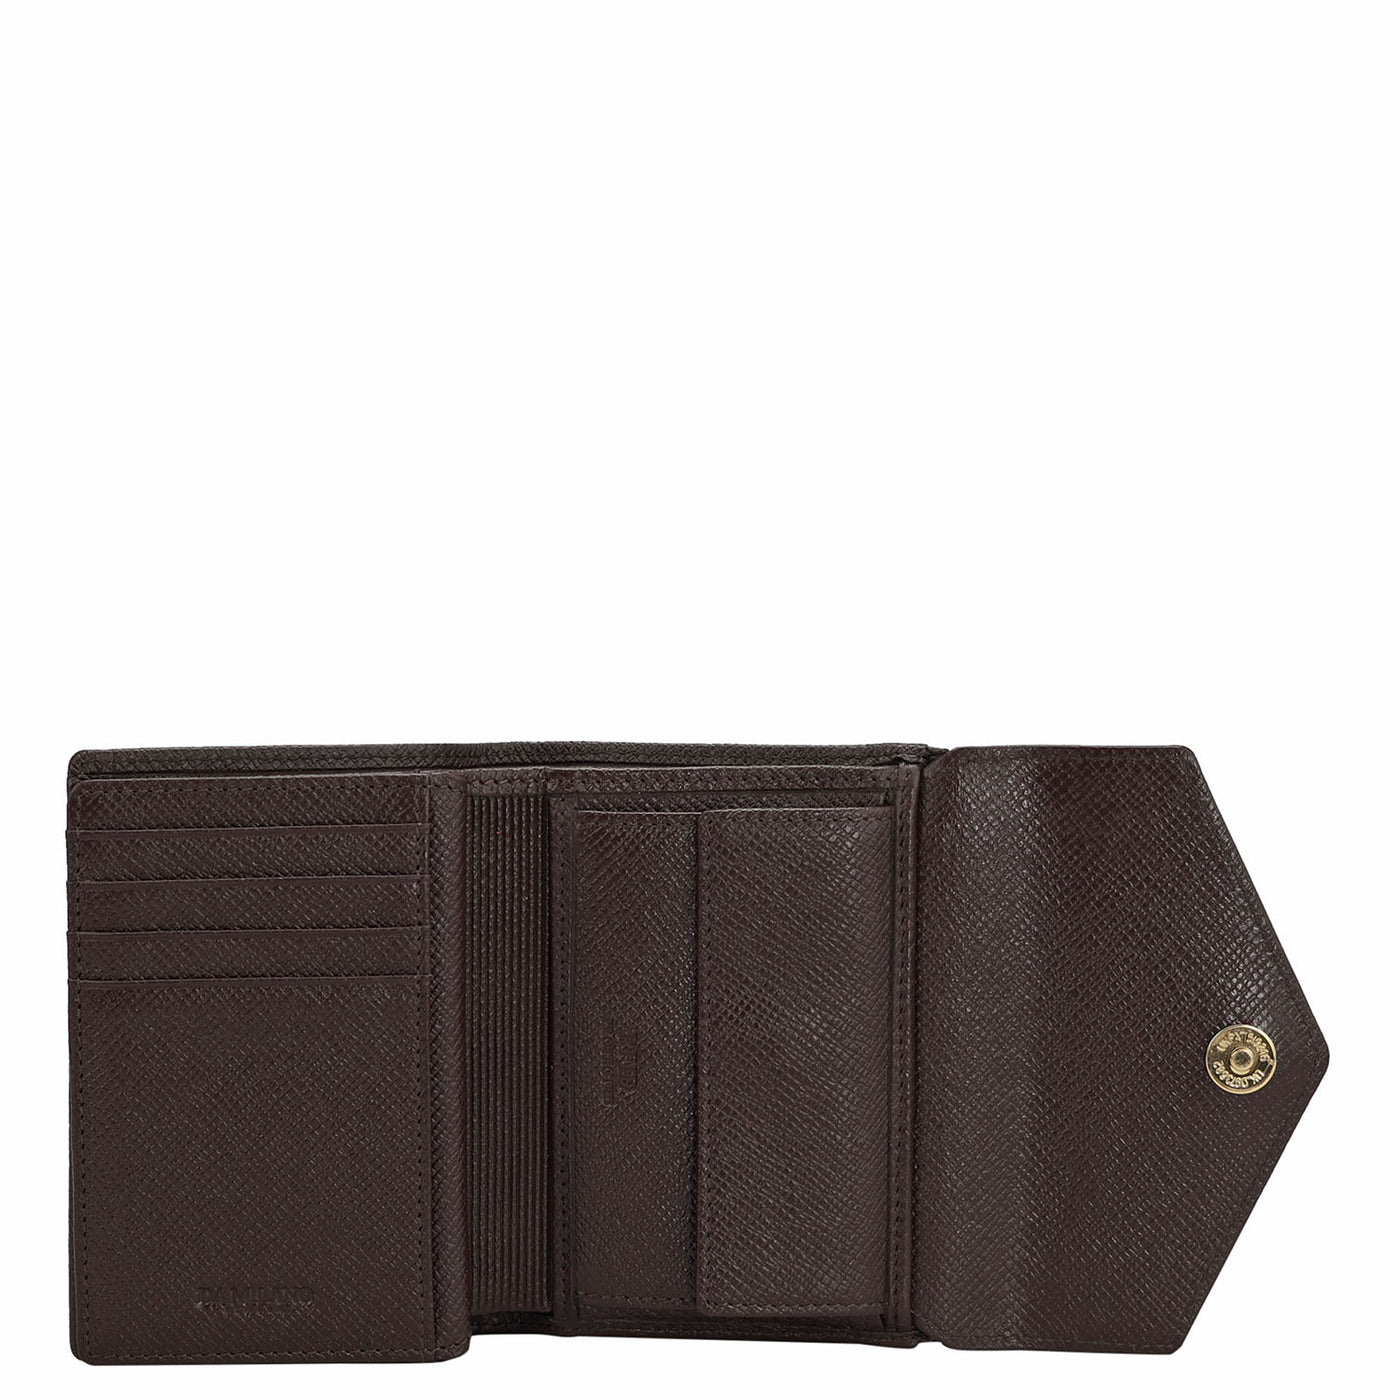 Monogram Leather Ladies Wallet - Chocolate